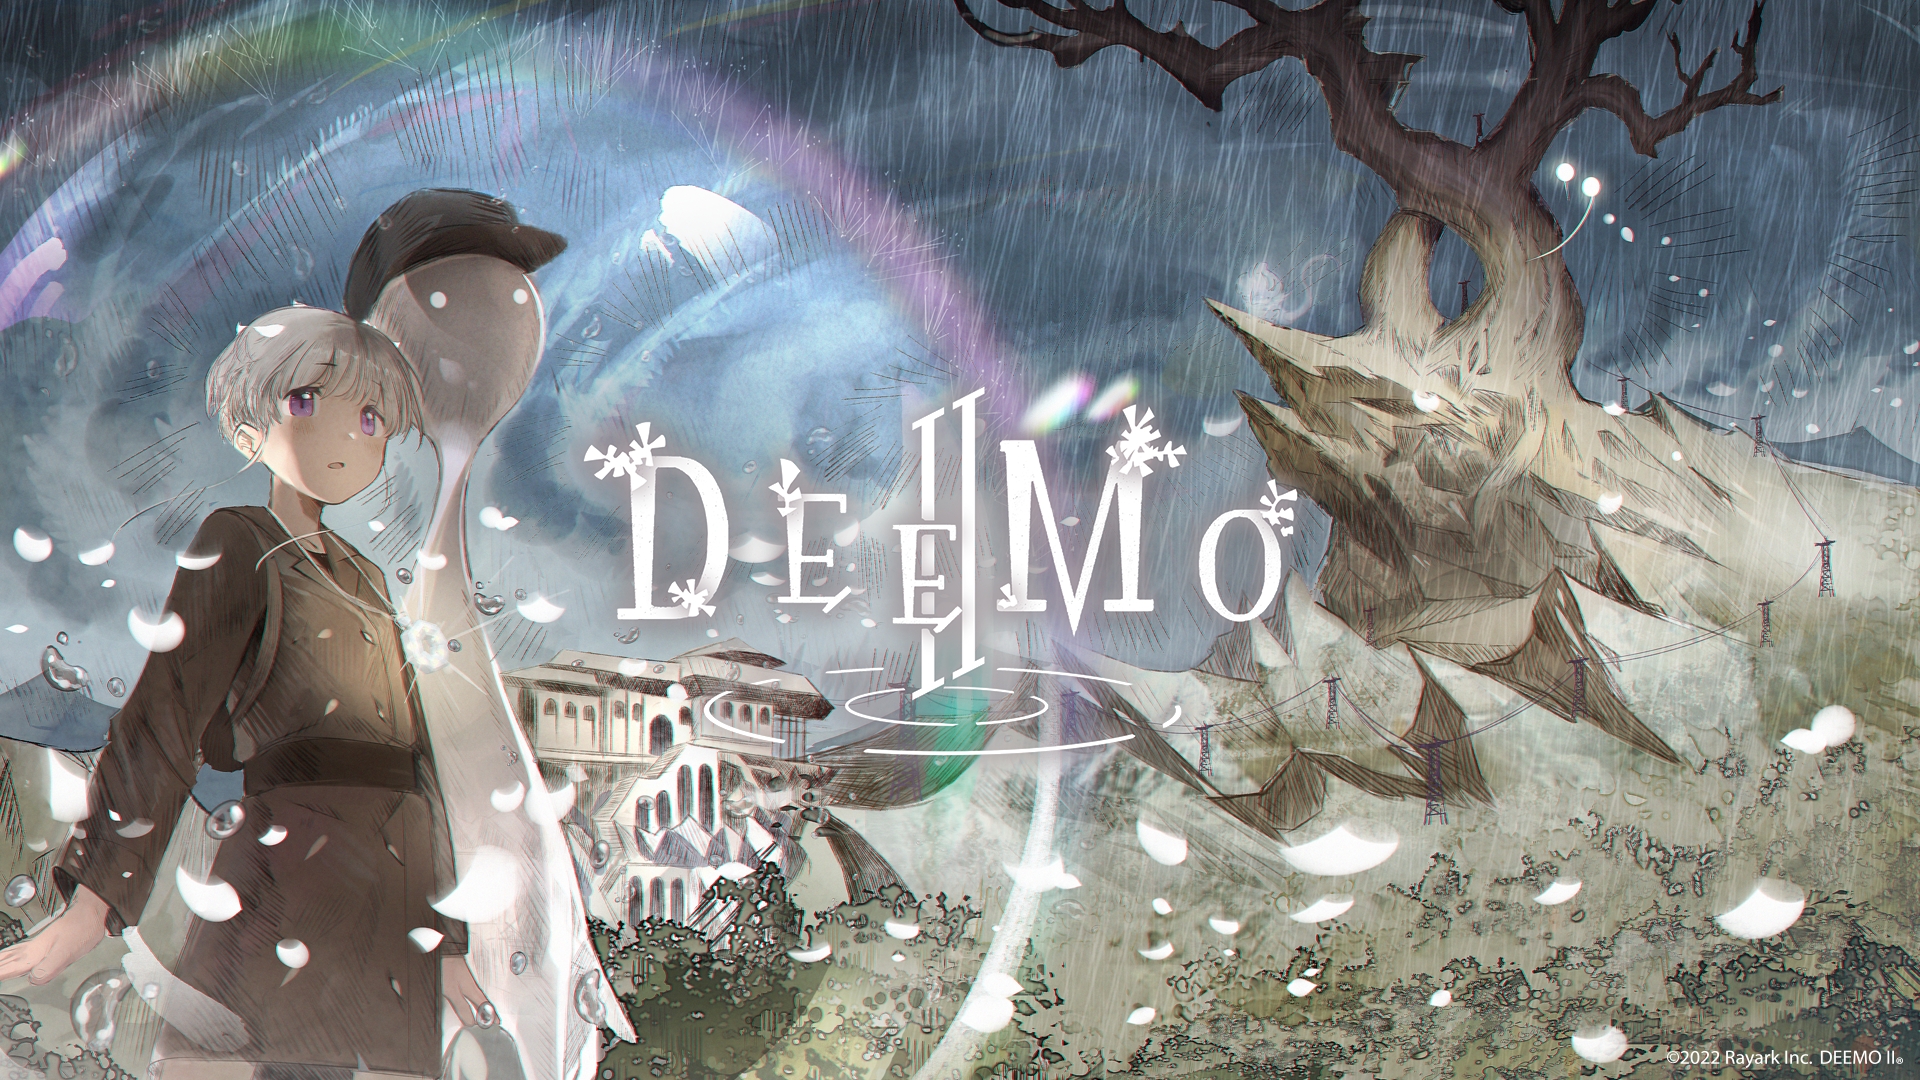 Deemo Ii メインストーリー第二章 高山壮遊記 が本日実装に 新たなロケーションと演奏モードに2種類のノーツを追加